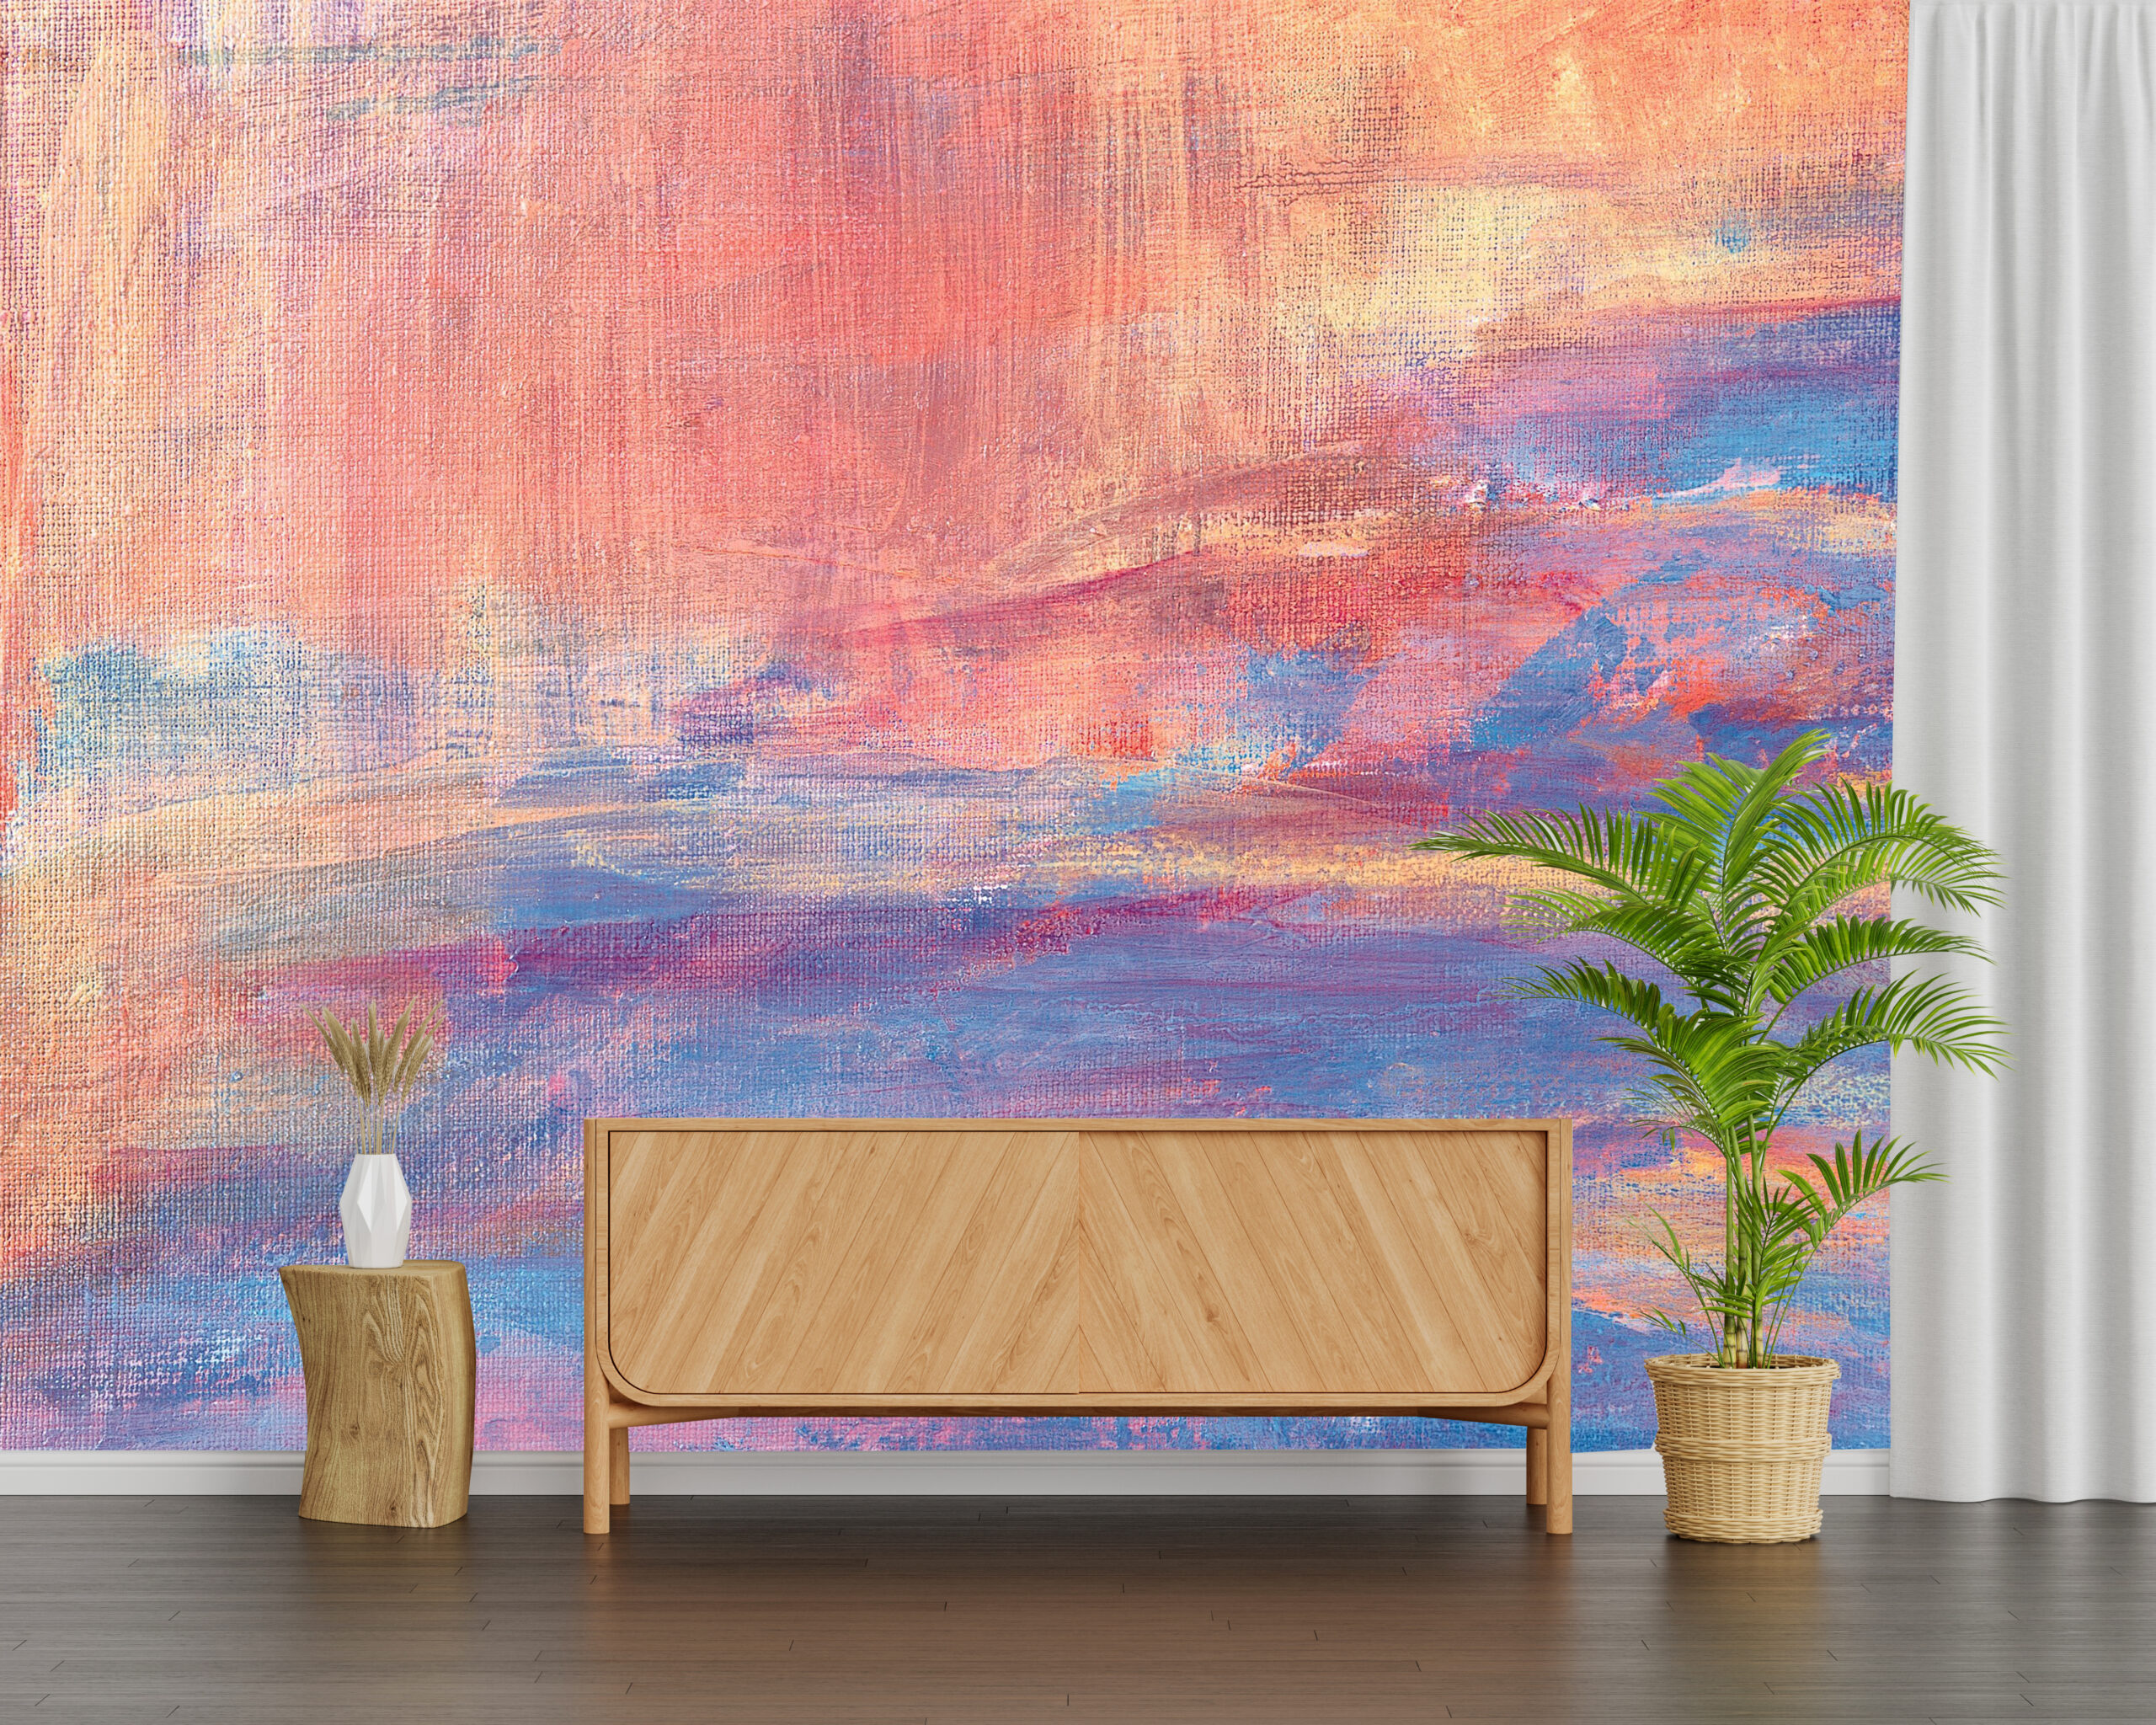 Wood sideboard in living room with copy space, 3D rendering